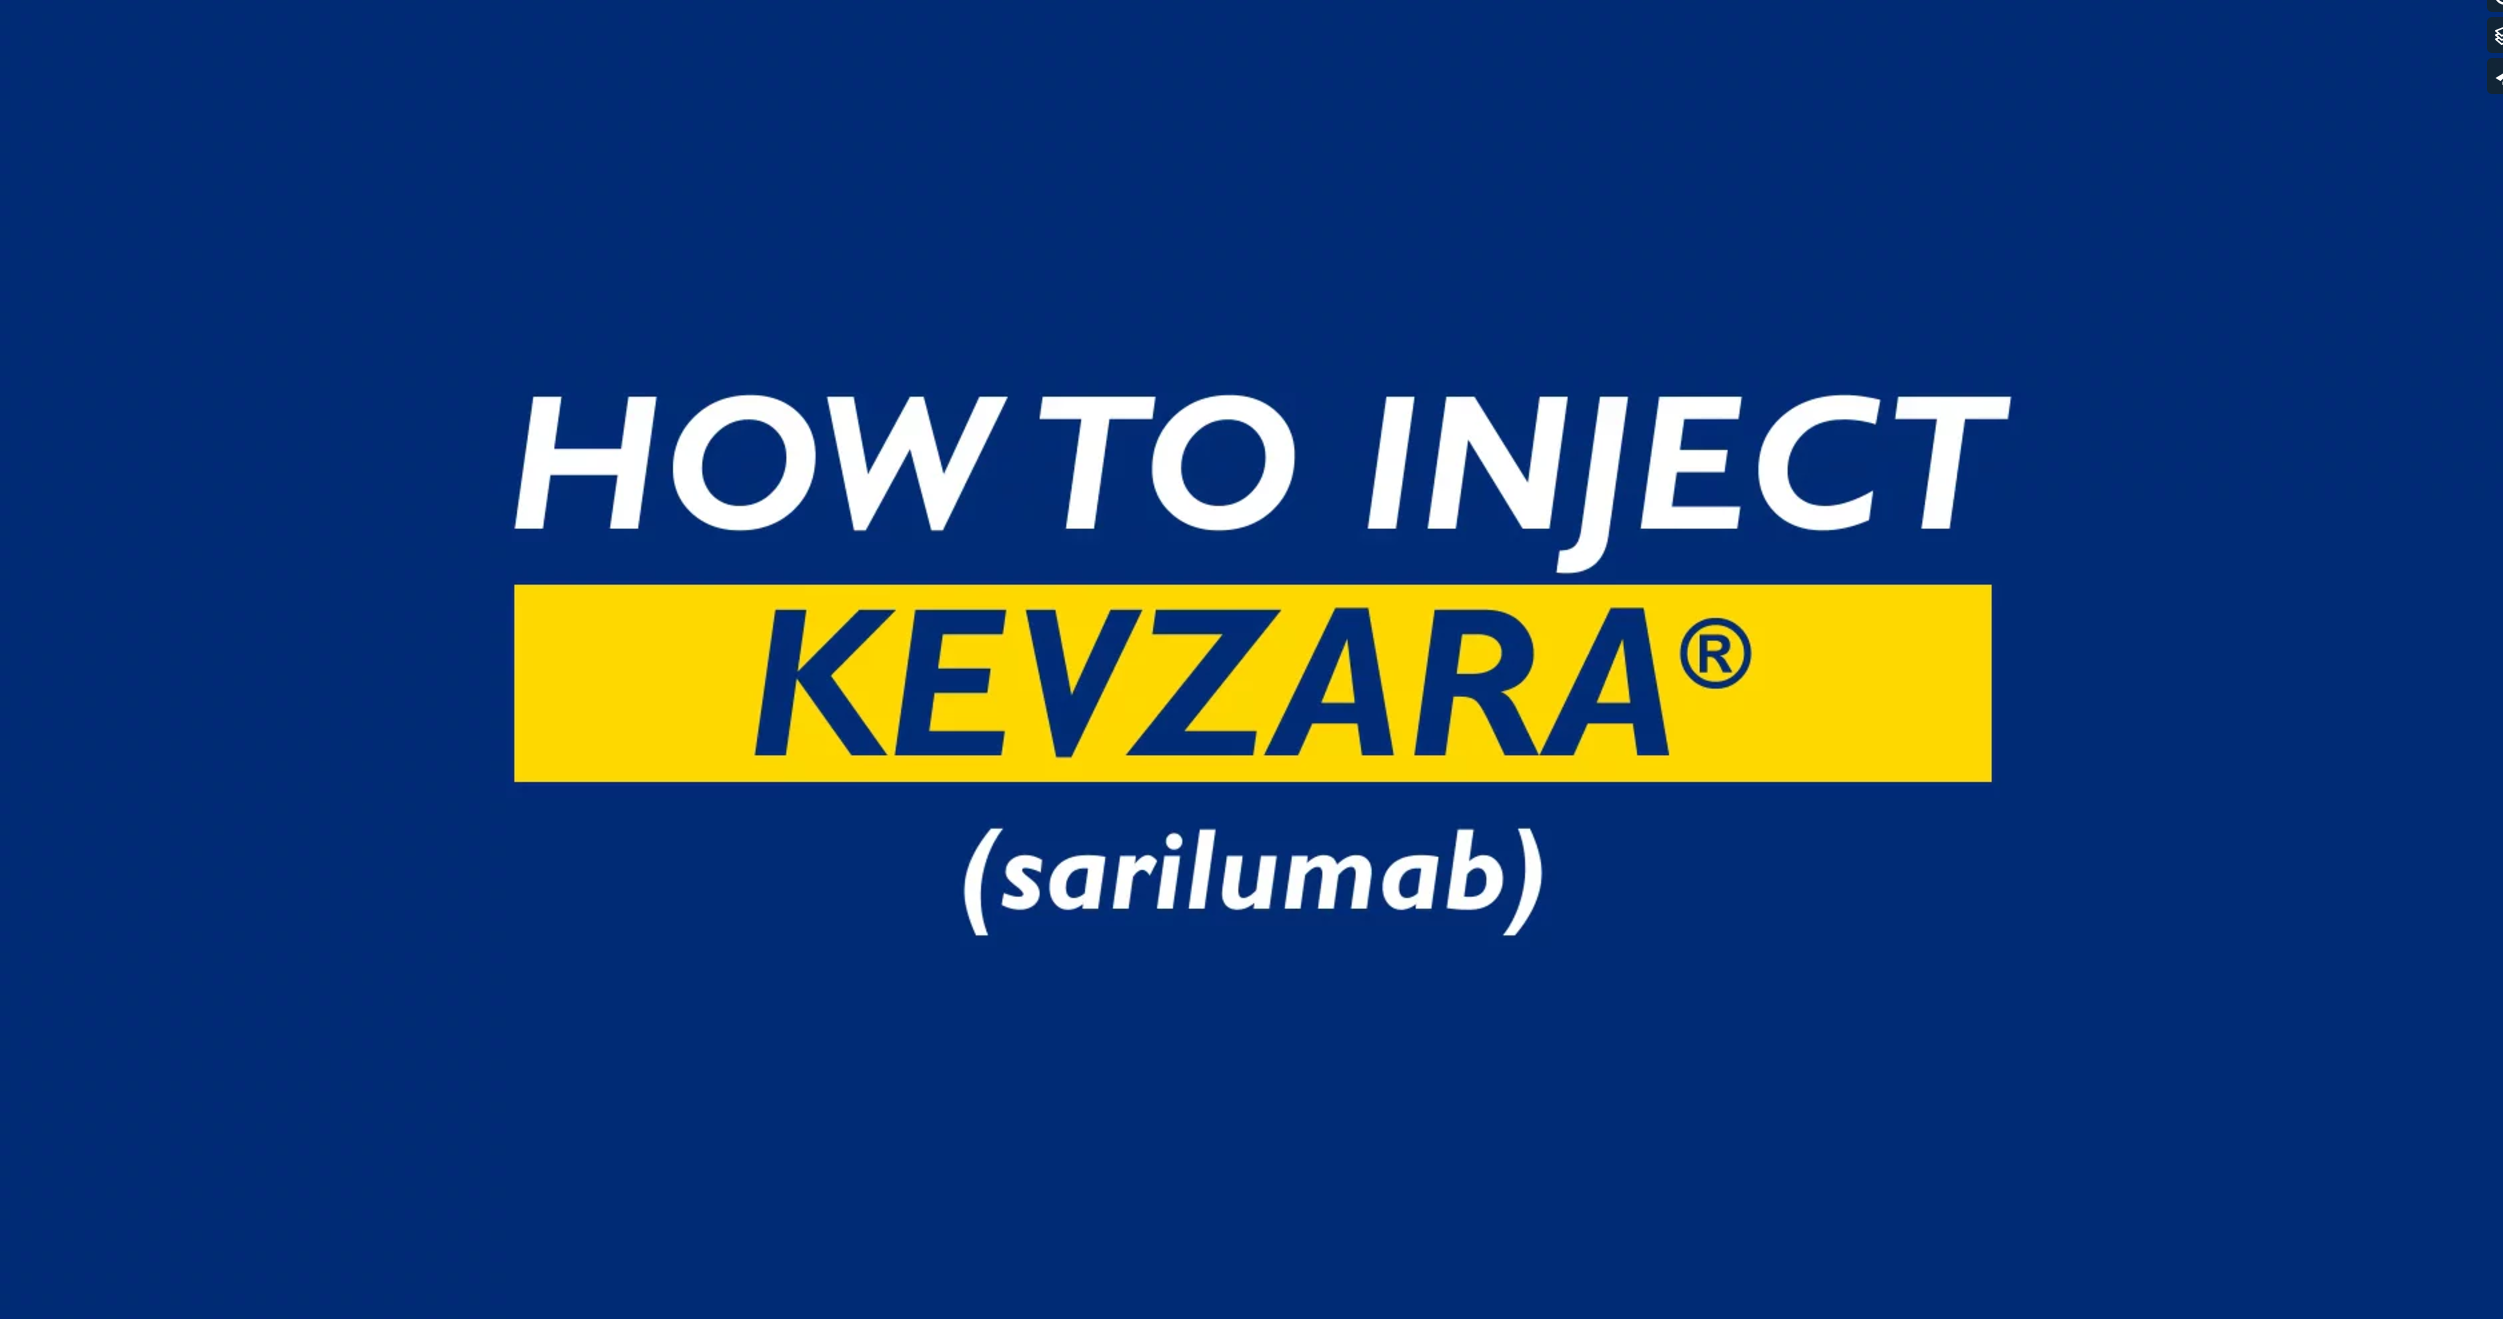 How To Inject Kevzara (sarilumab)